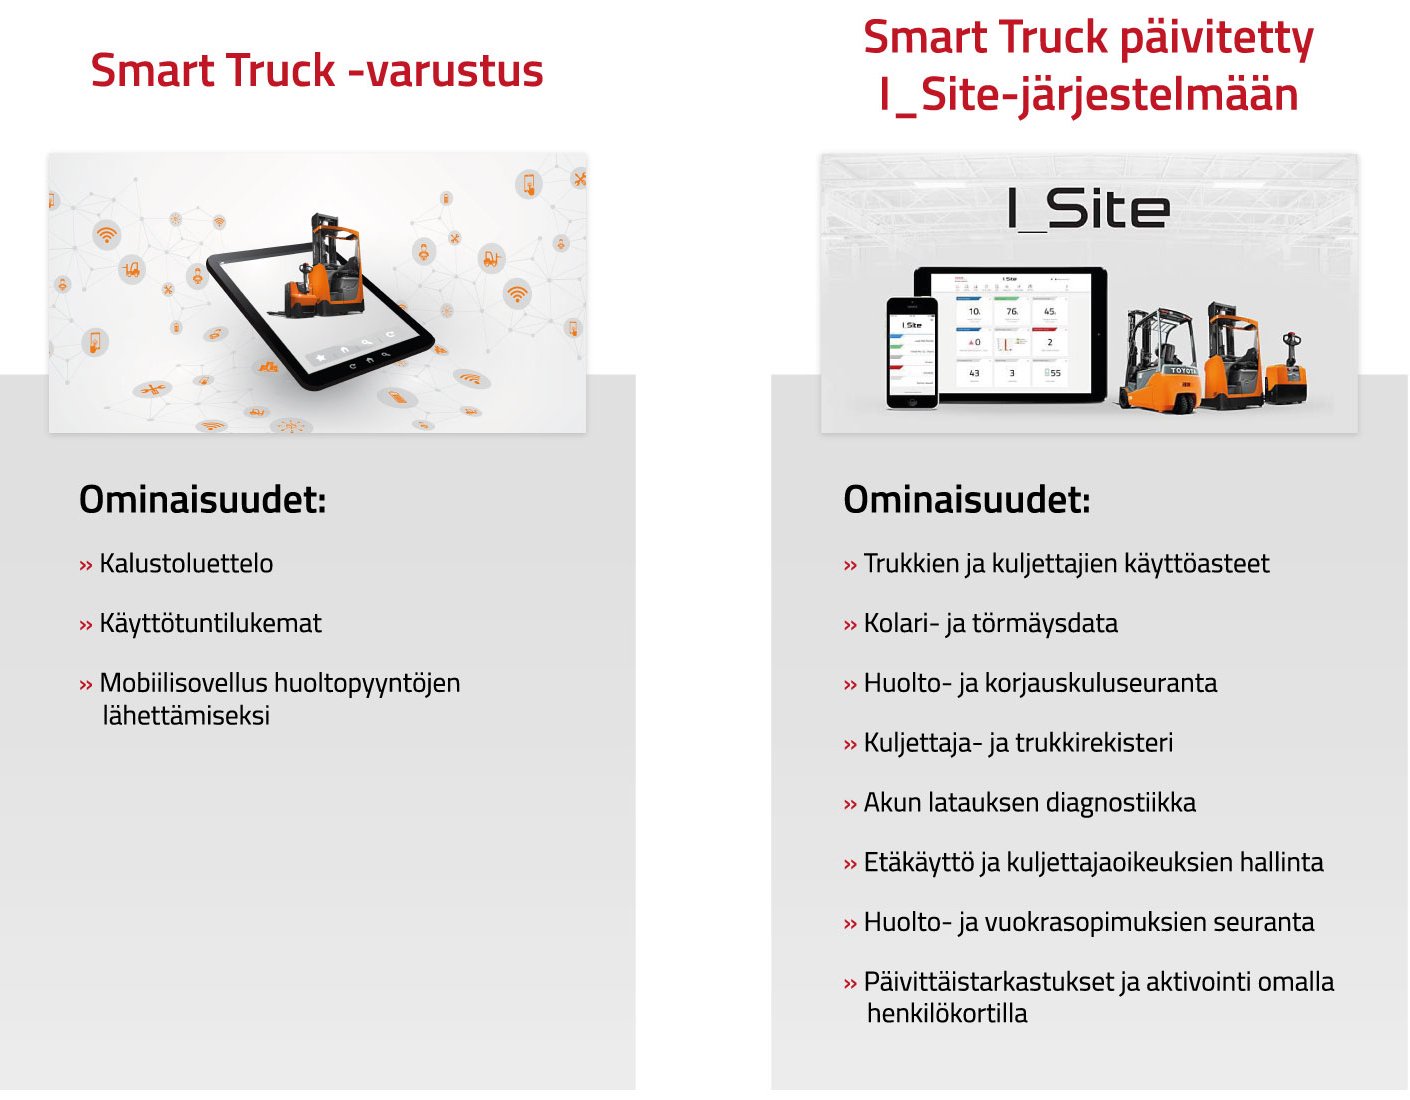 Smart Truck vs. Smart Truck + I_Site